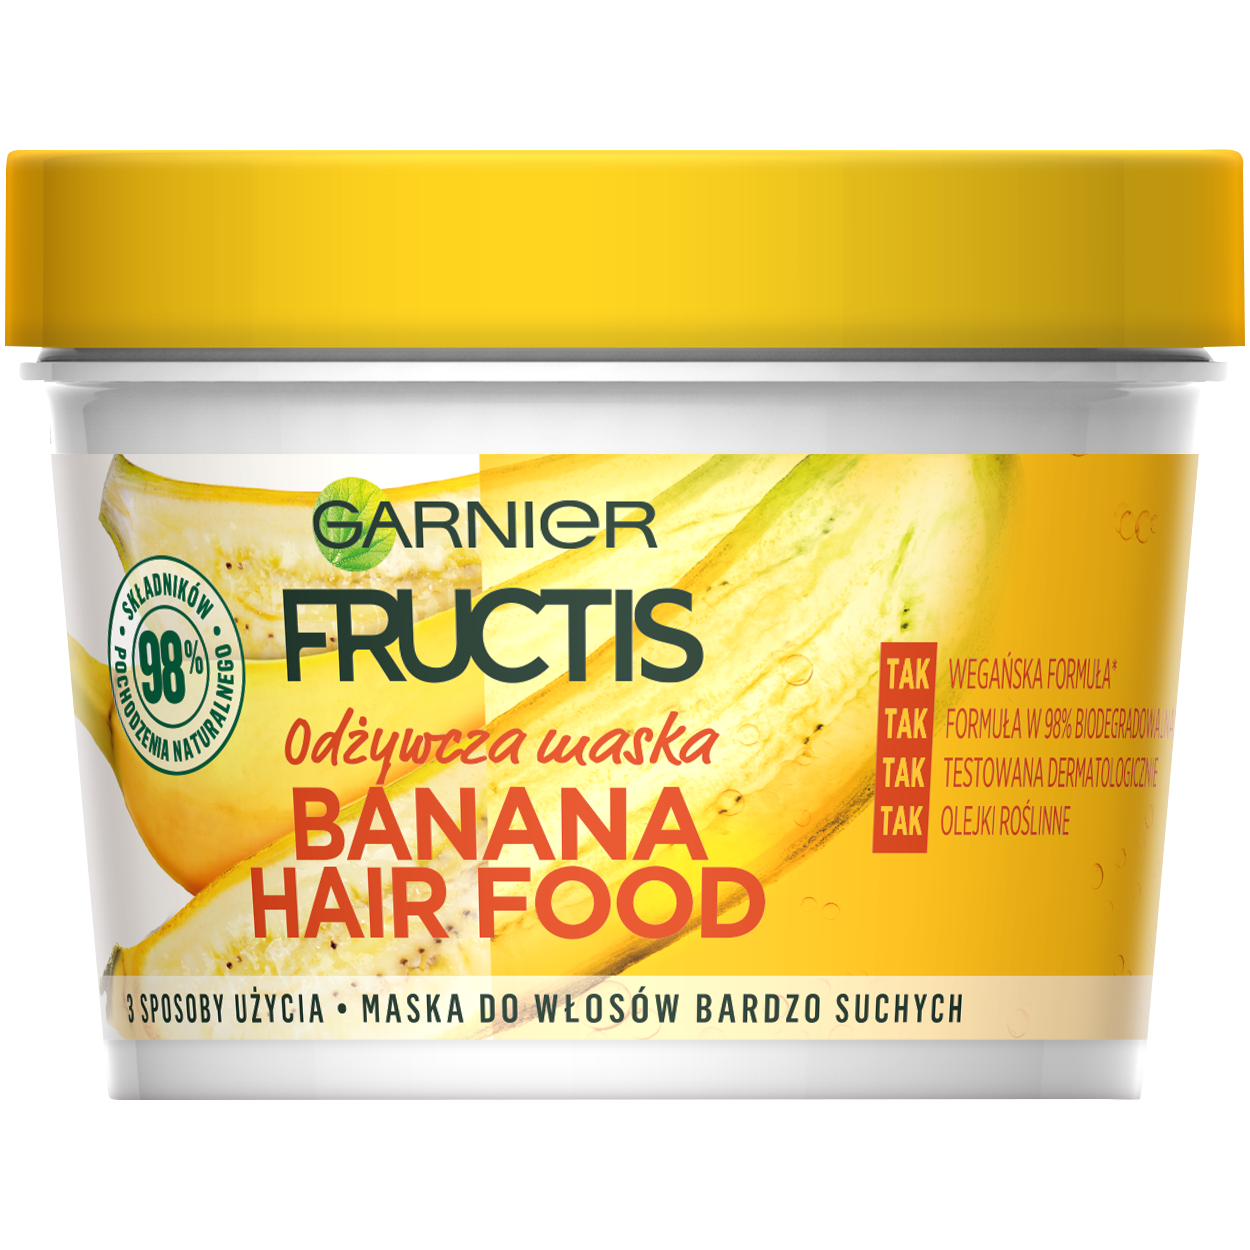 Garnier Fructis Banana Hair Food maska do włosów bardzo suchych, 390 ml |  hebe.pl